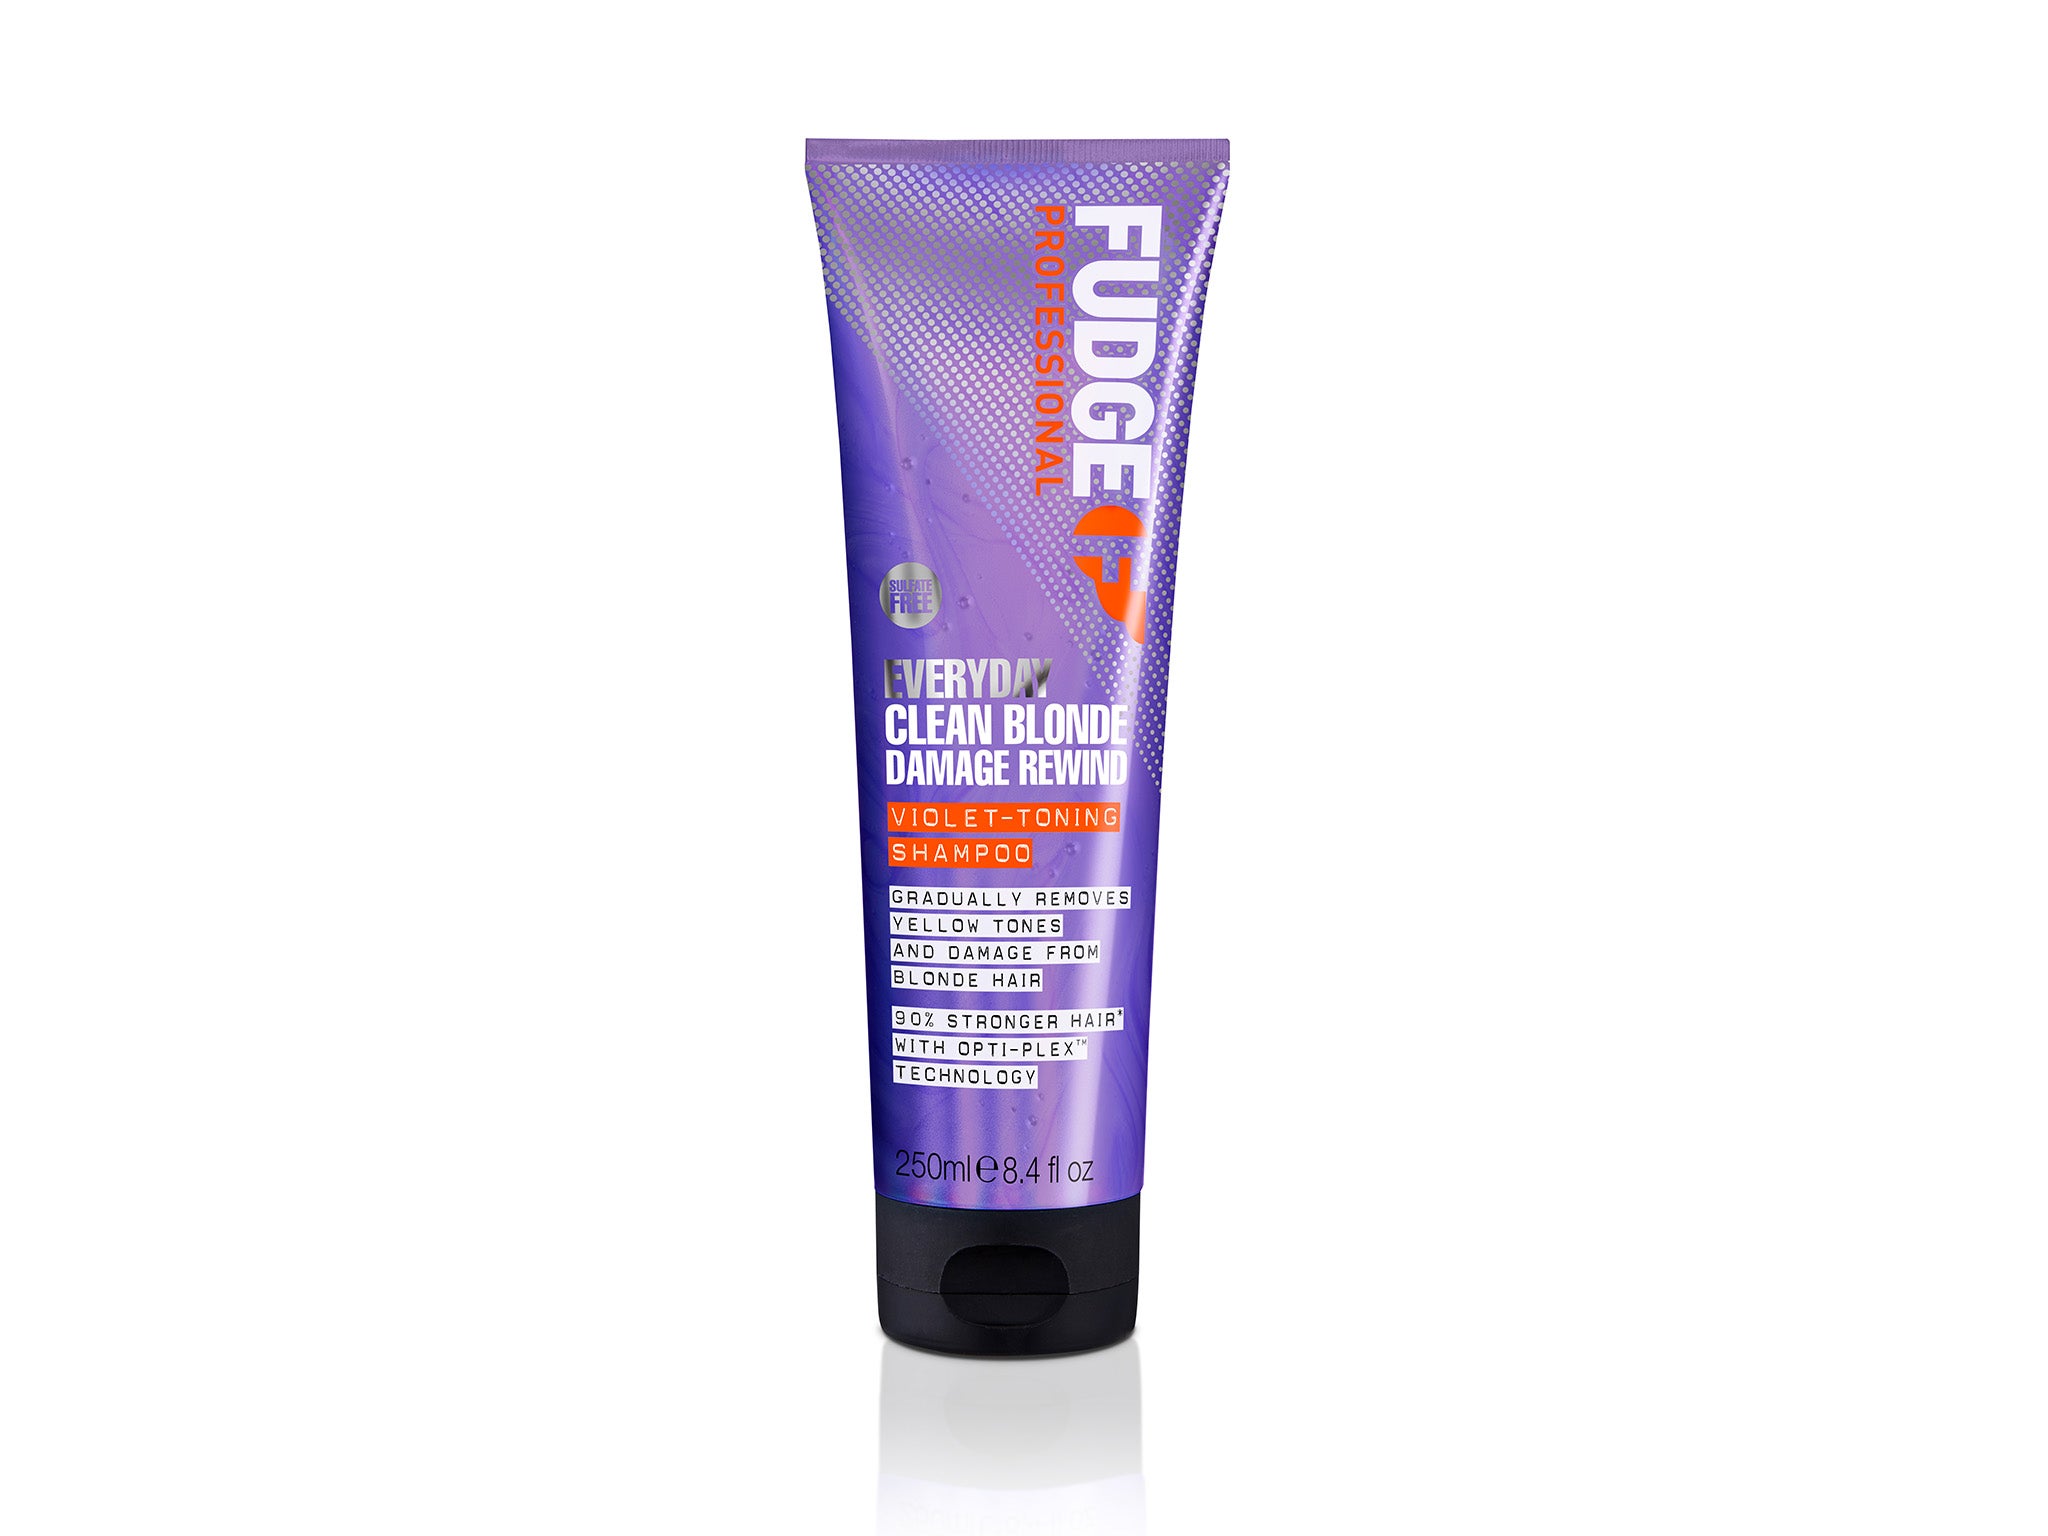 Fudge Professional everyday clean blonde damage rewind violet toning shampoo